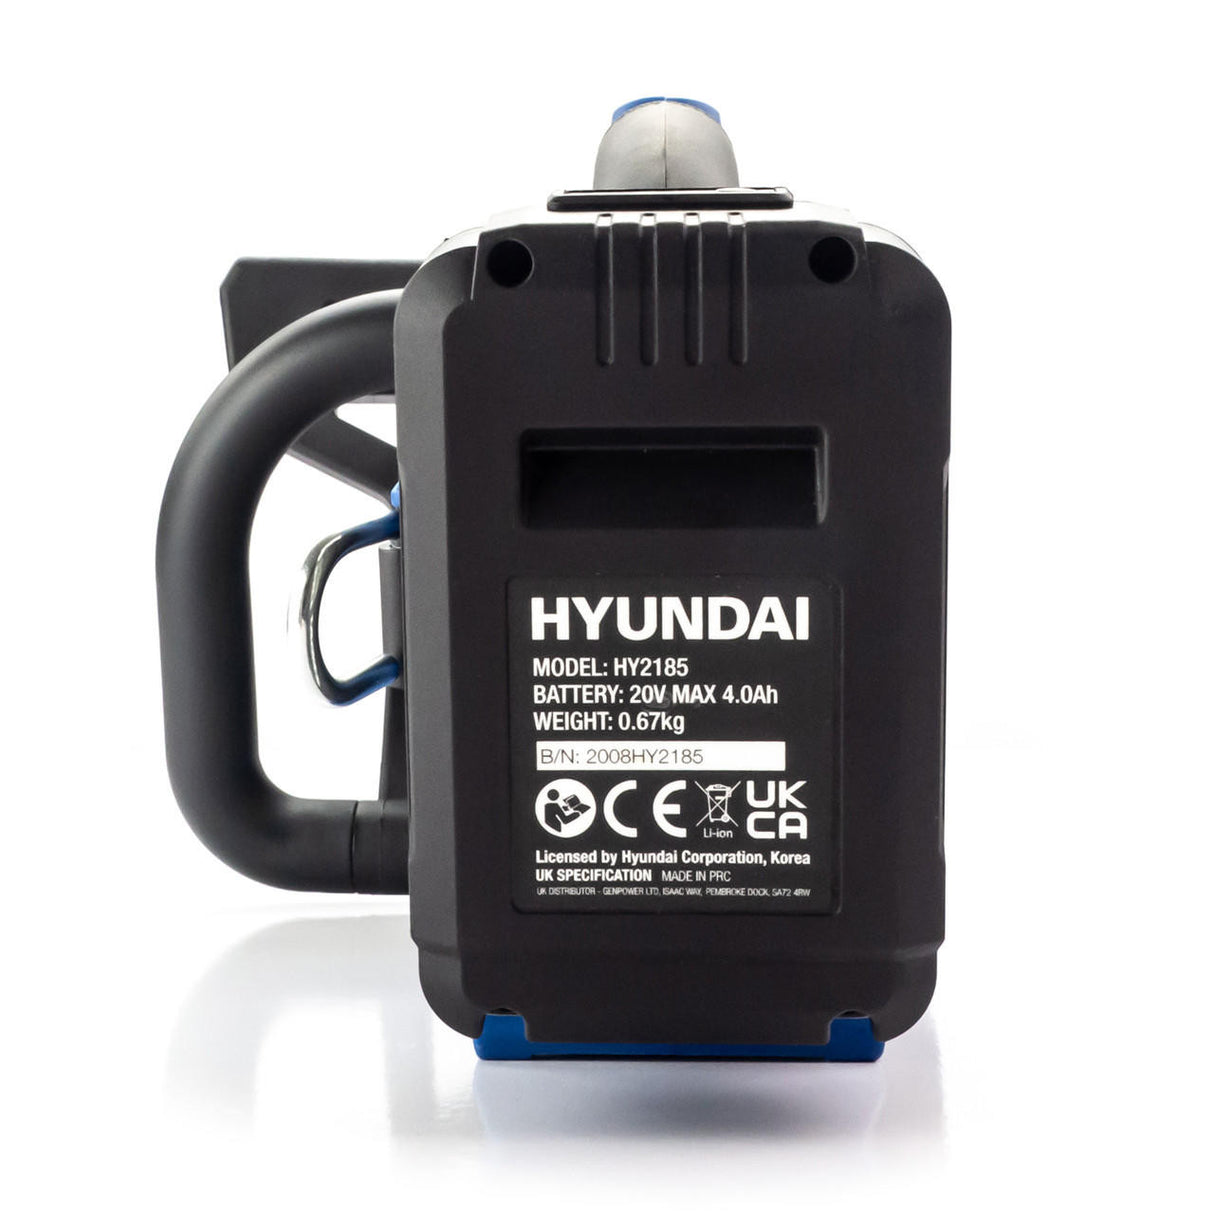 Hyundai Cordless Chainsaw, 20v lithium ion, brushless, li-ion | HY2190 - Battery